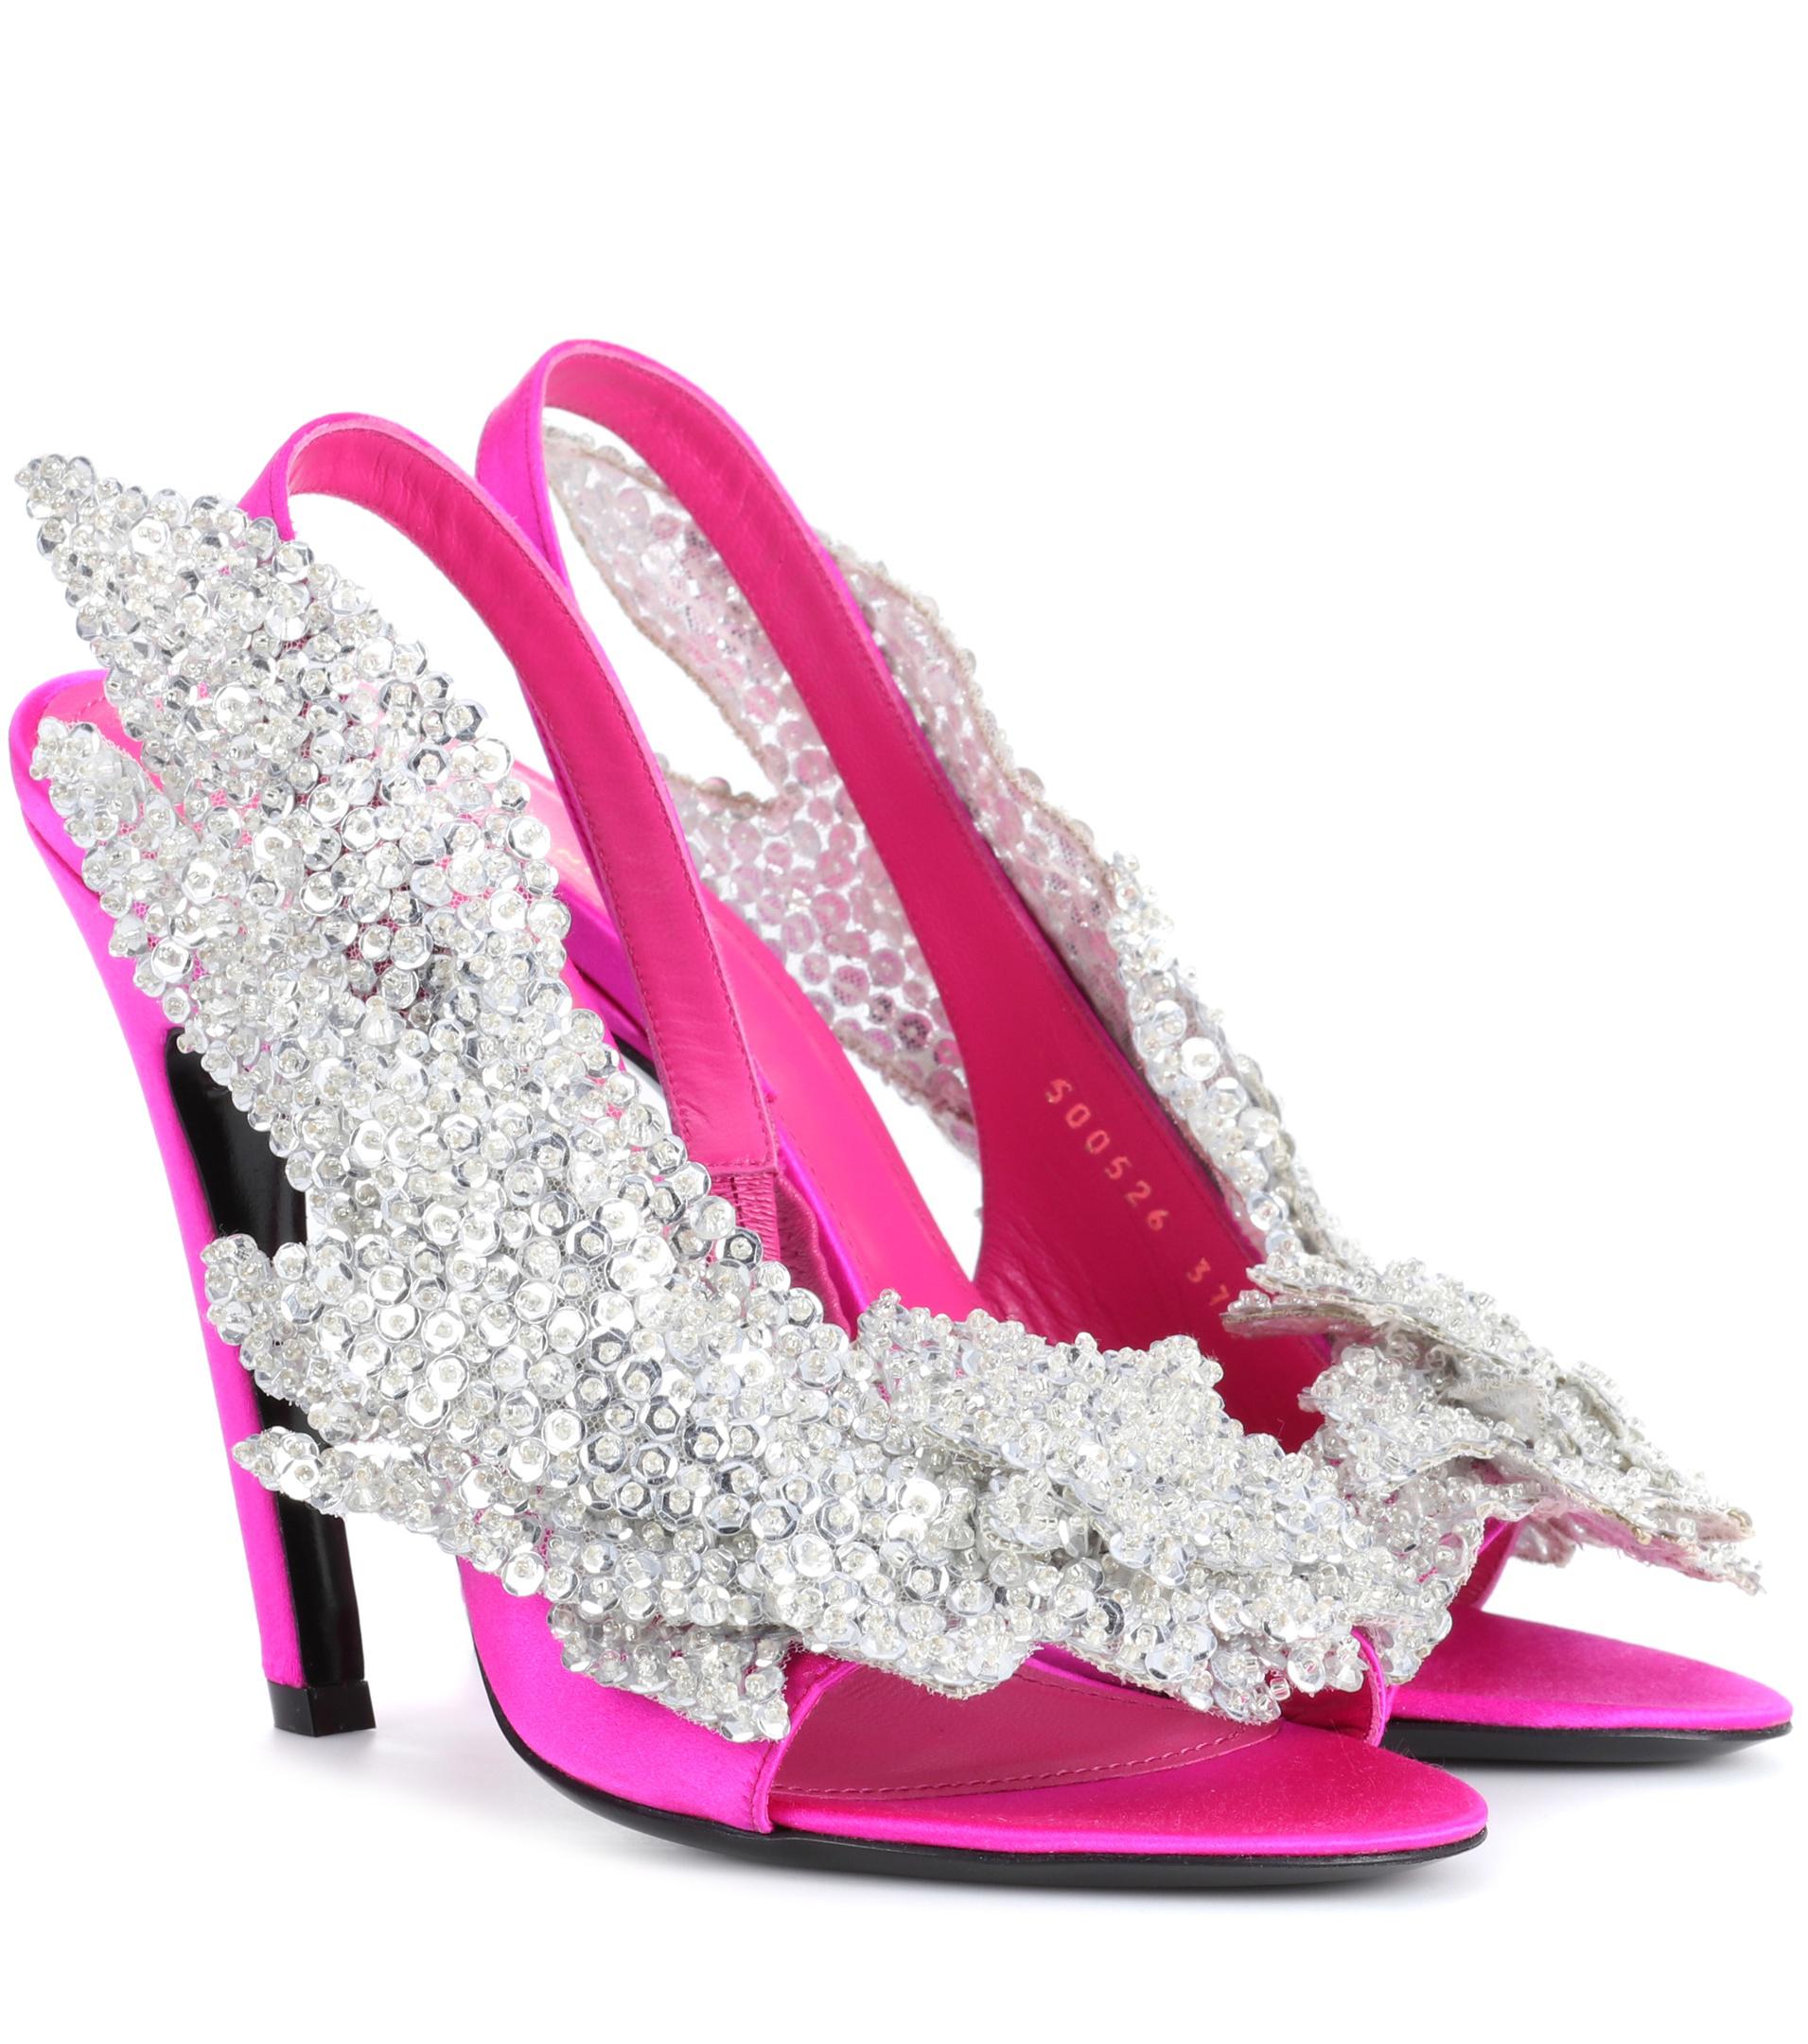 Balenciaga Embellished Satin Sandals in Pink | Lyst